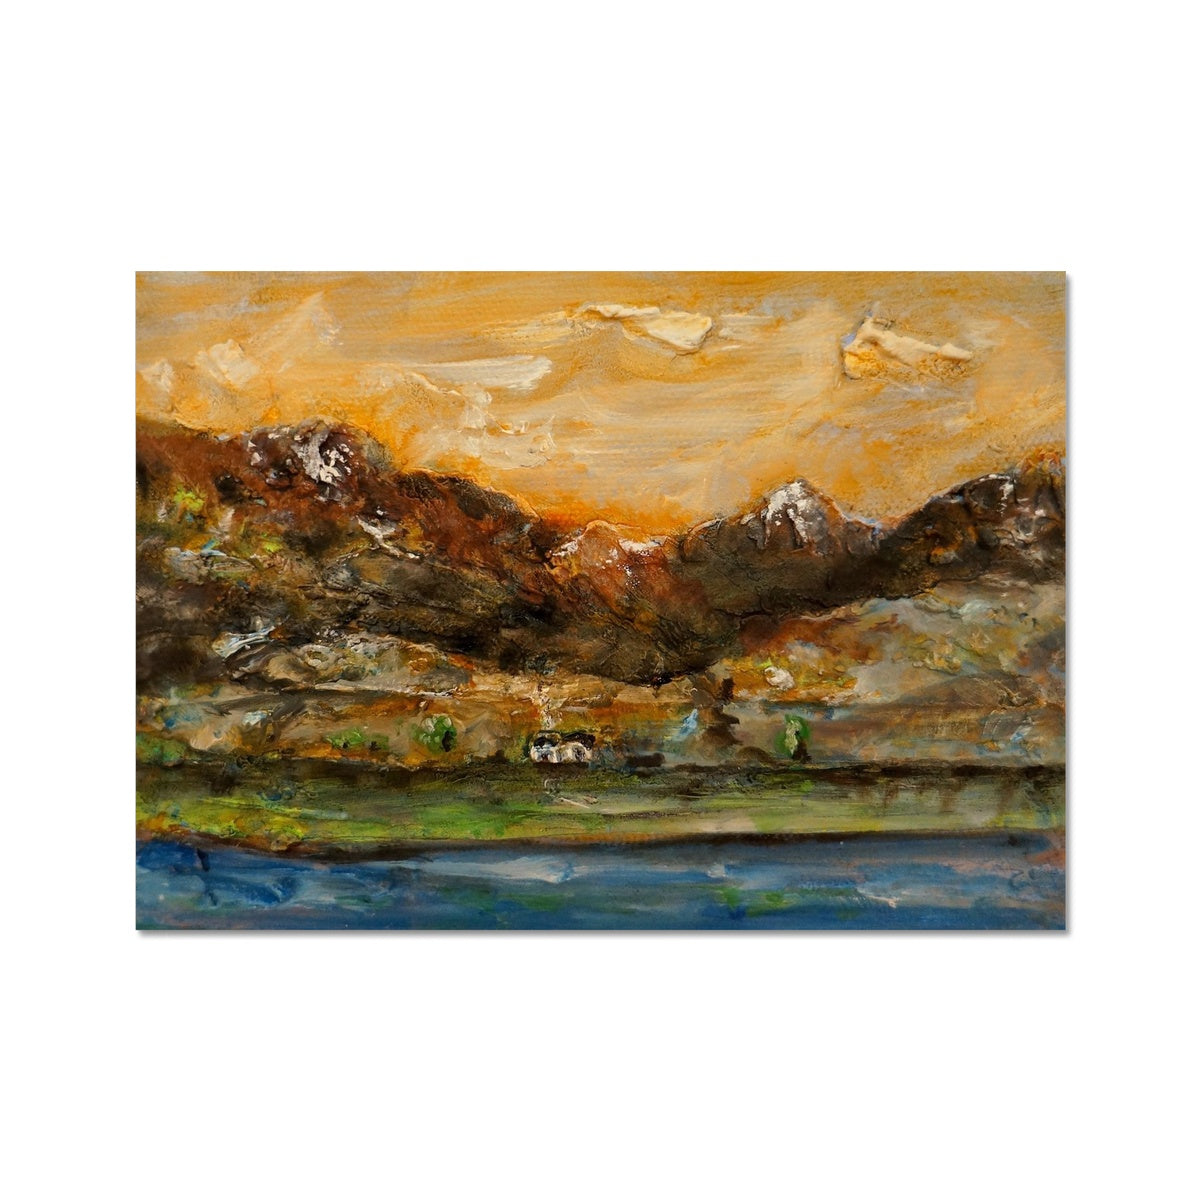 A Glencoe Cottage Painting | Fine Art Prints From Scotland-Unframed Prints-Glencoe Art Gallery-A4 Landscape-Paintings, Prints, Homeware, Art Gifts From Scotland By Scottish Artist Kevin Hunter